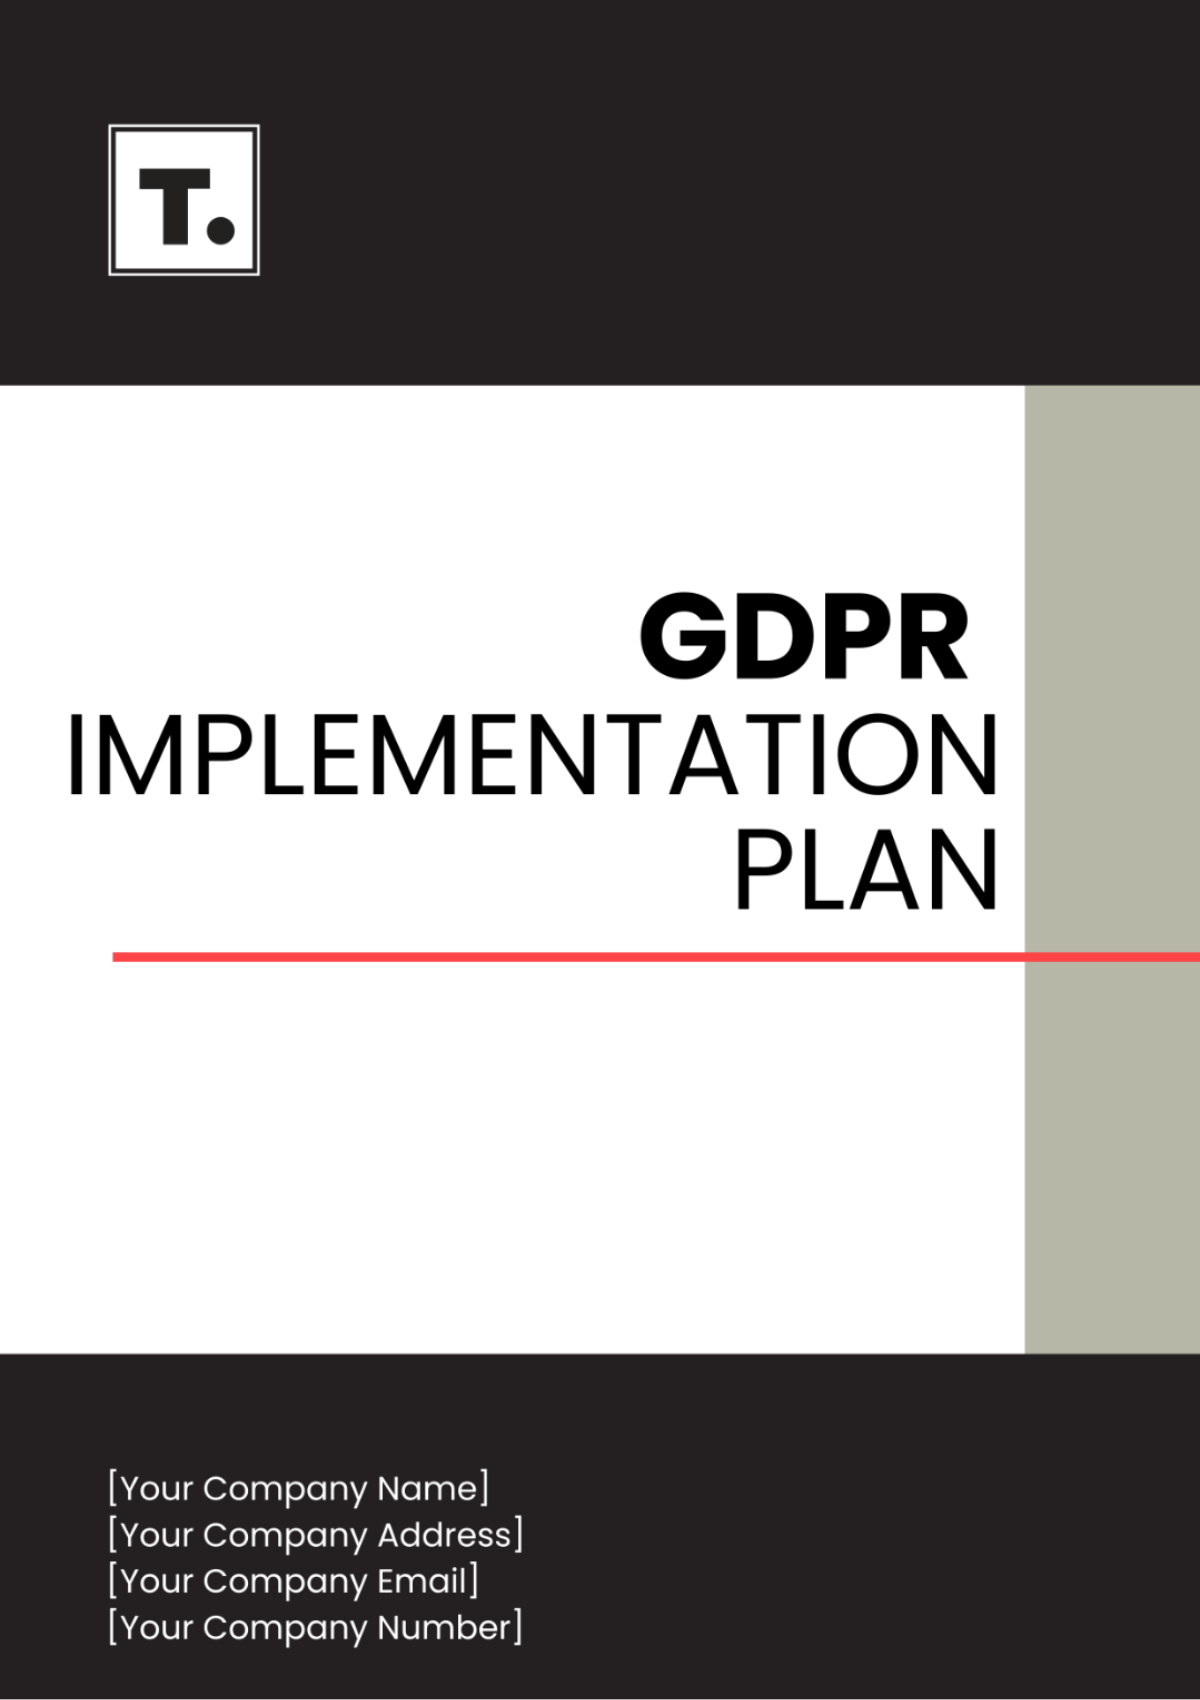 GDPR Implementation Plan Template